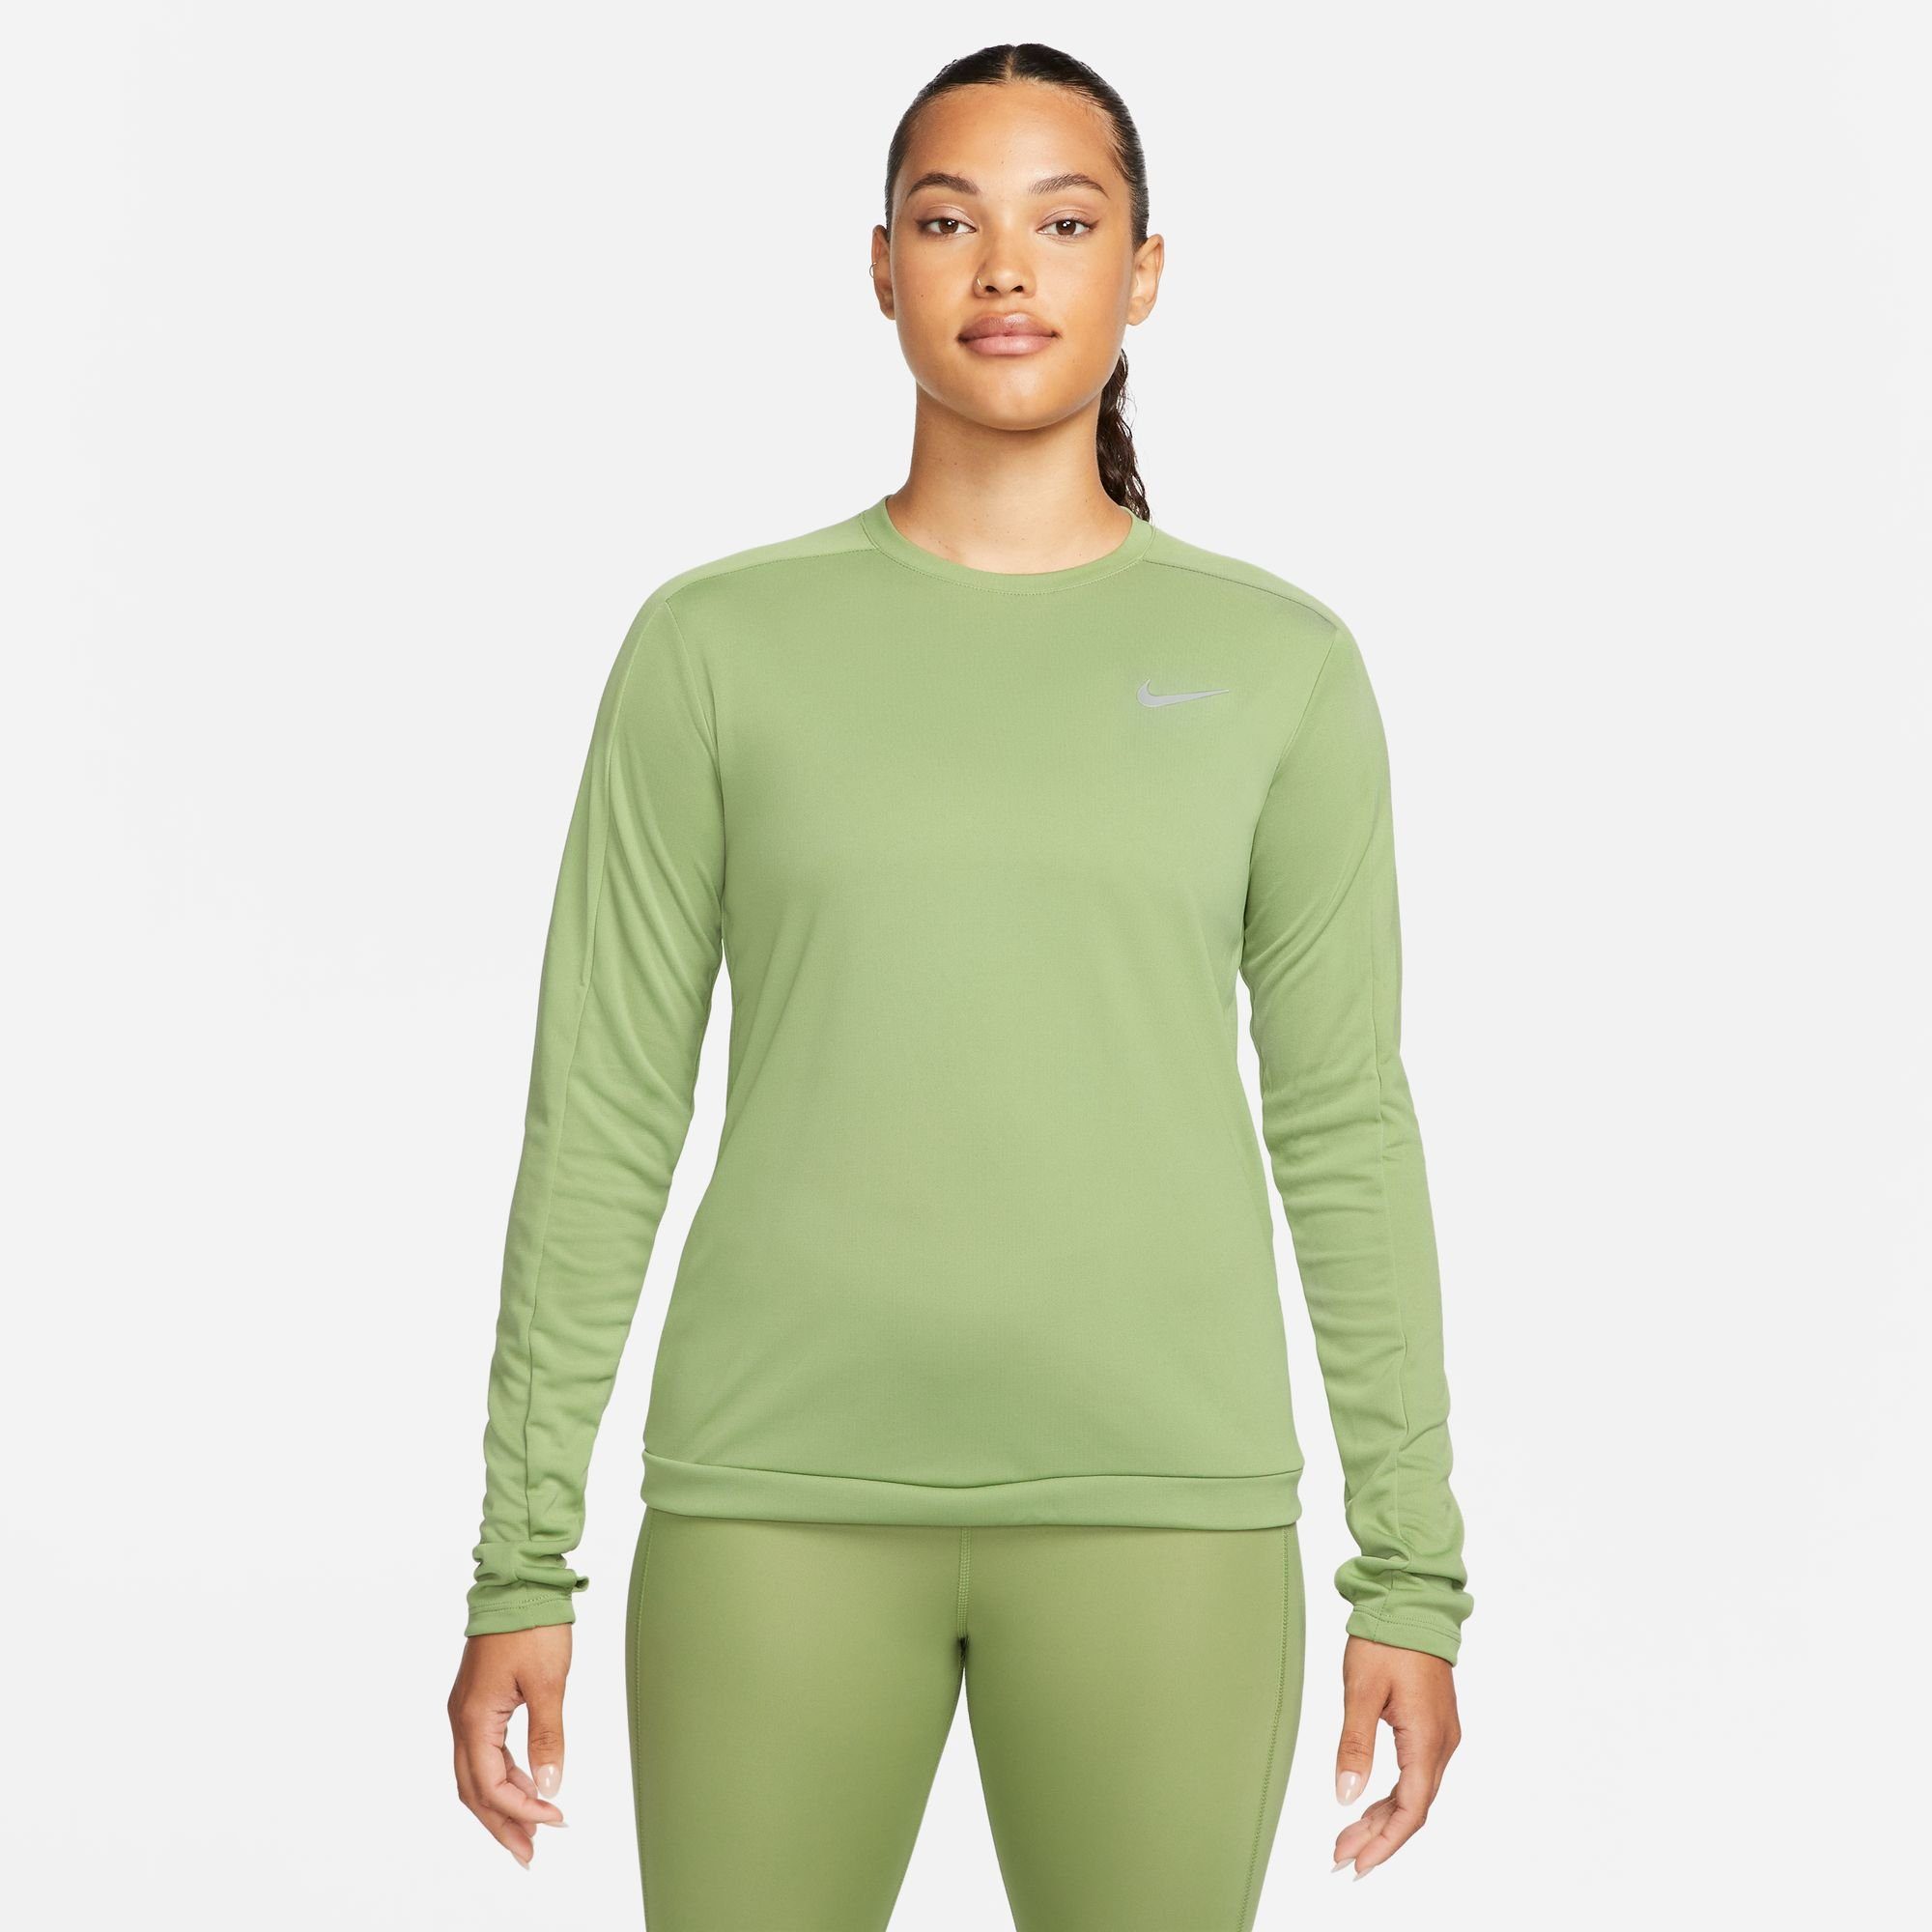 RUNNING CREW-NECK WOMEN'S Laufshirt Nike TOP grün DRI-FIT